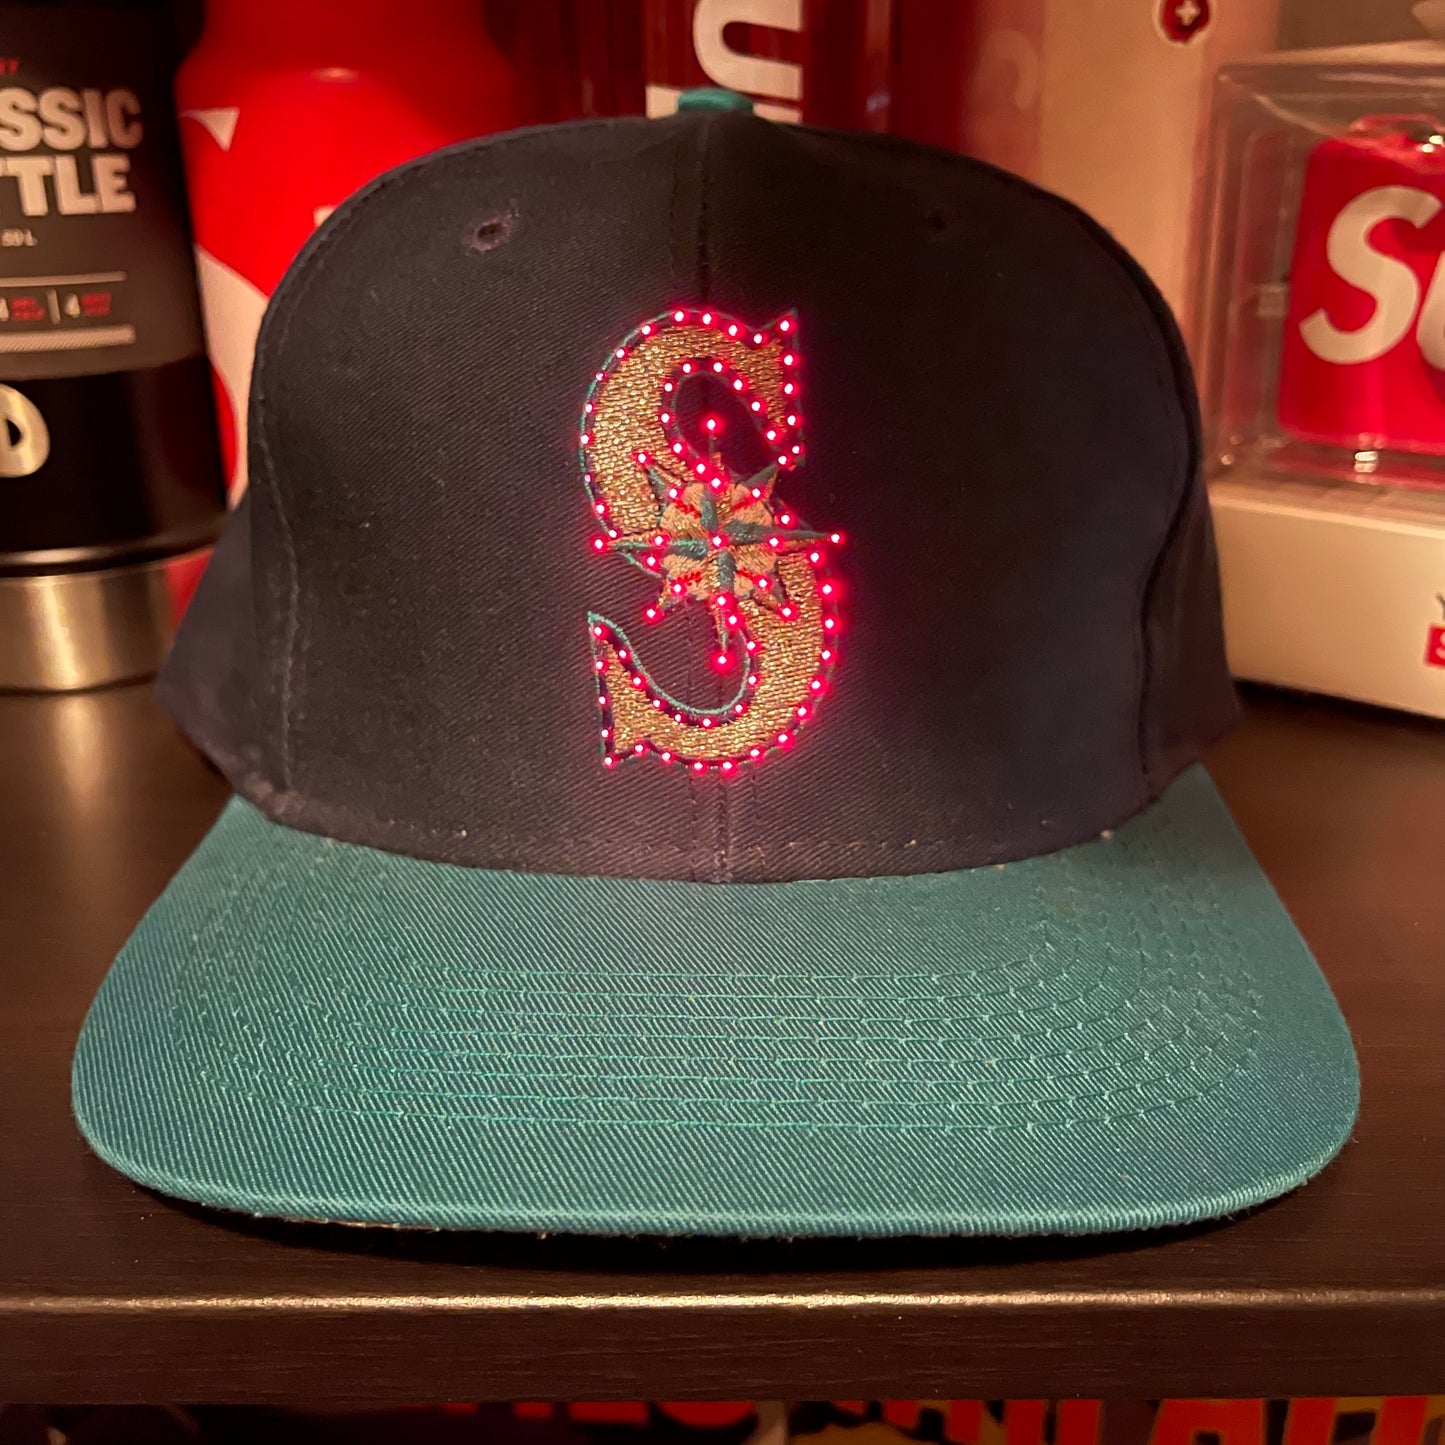 Vintage Logo7 Seattle Mariners Snapback hat. Light’s Up.